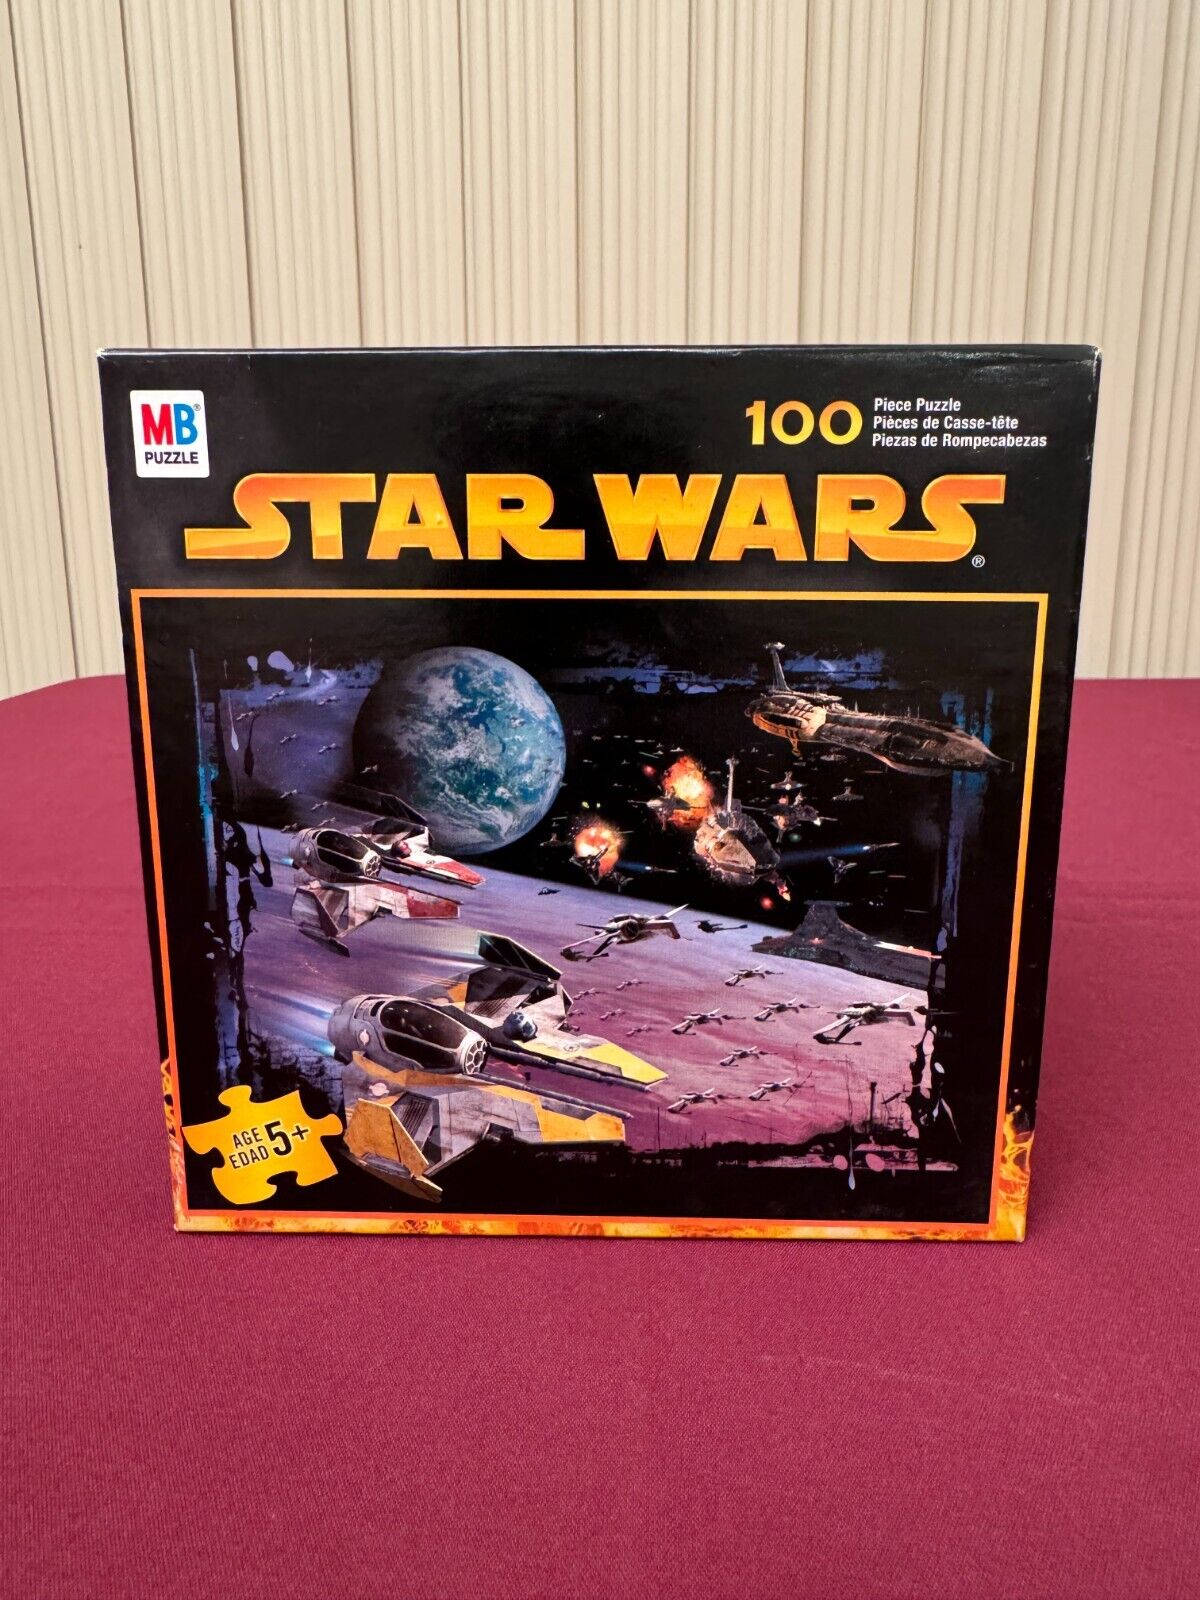 Star Wars Puzzle 100 Pcs Complete, Hasbro, MB